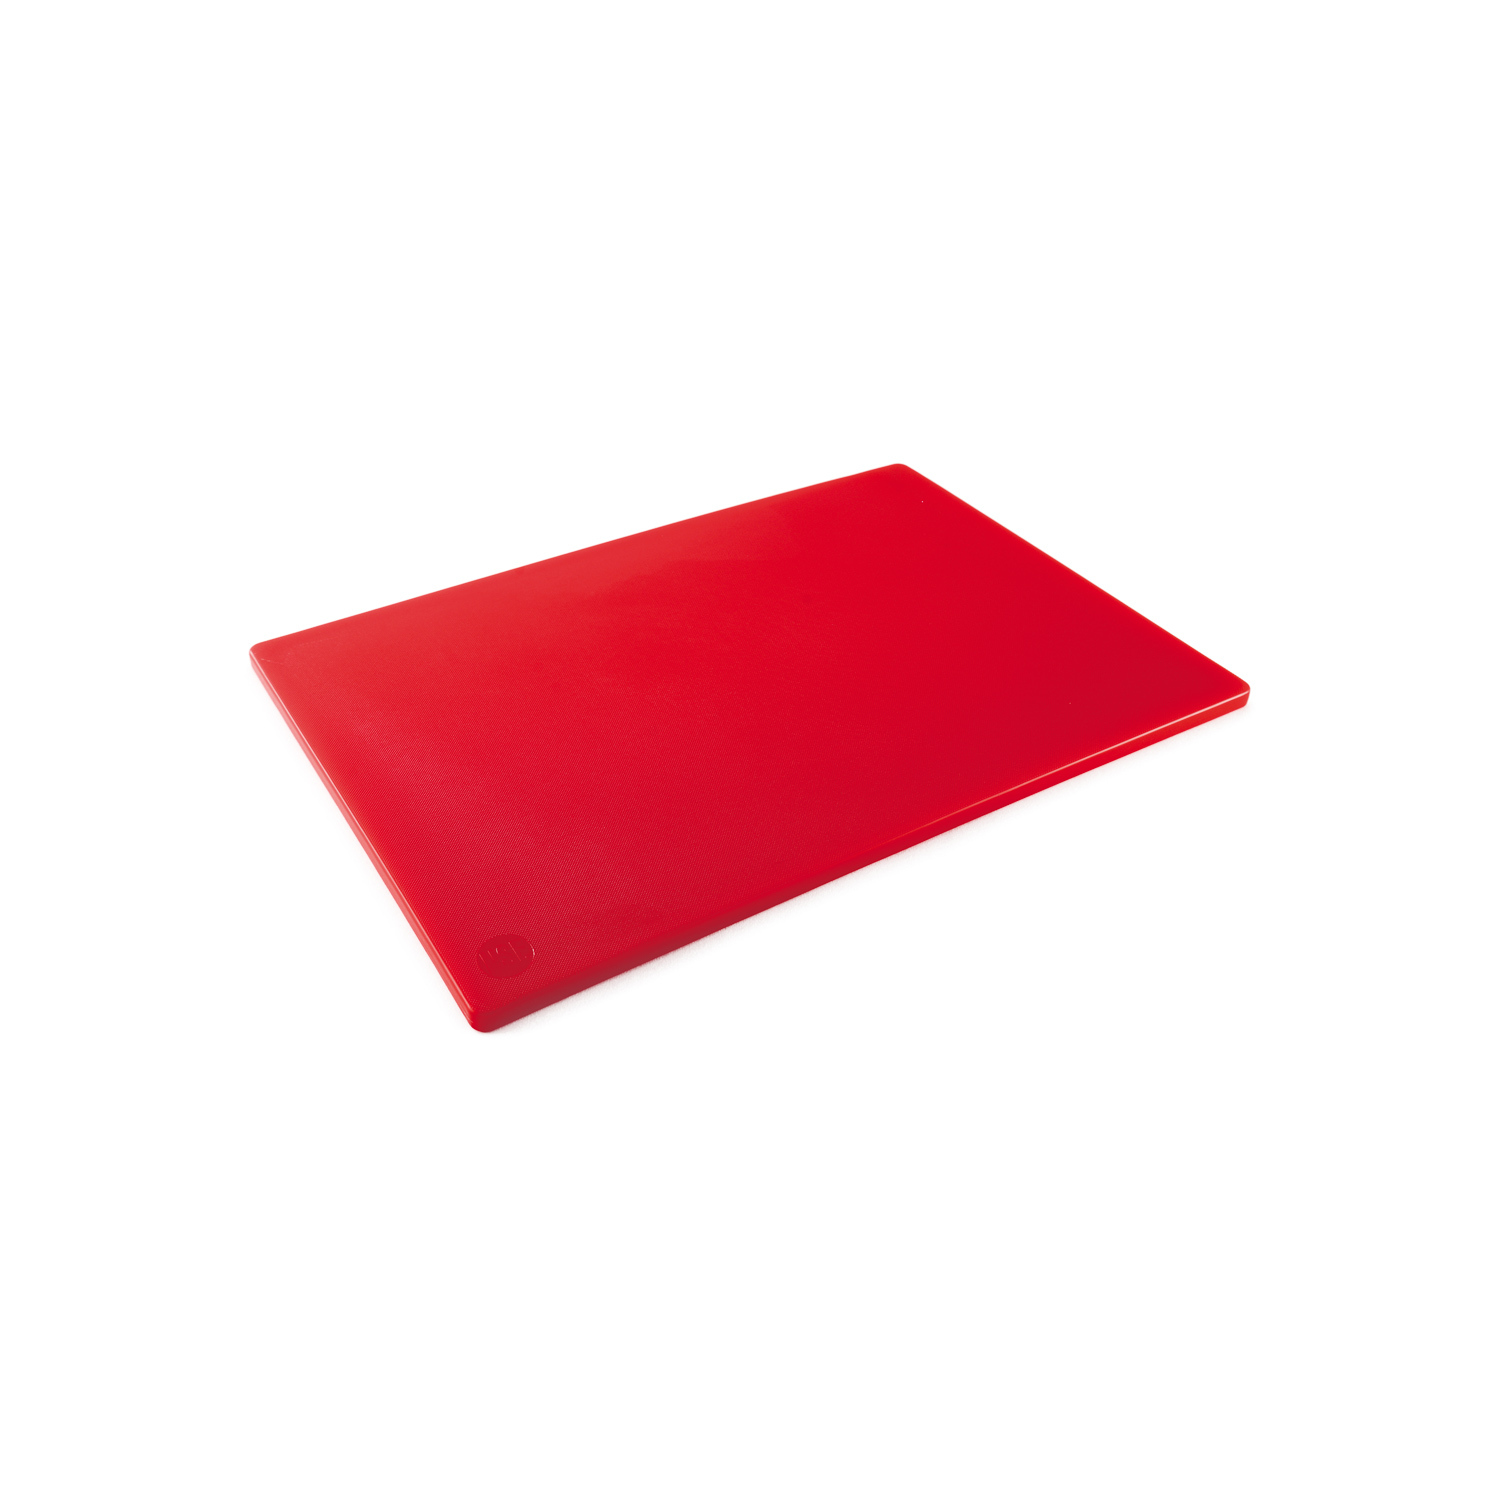 CAC China CBPH-1218R Red Plastic Cutting Board 18" x 12"